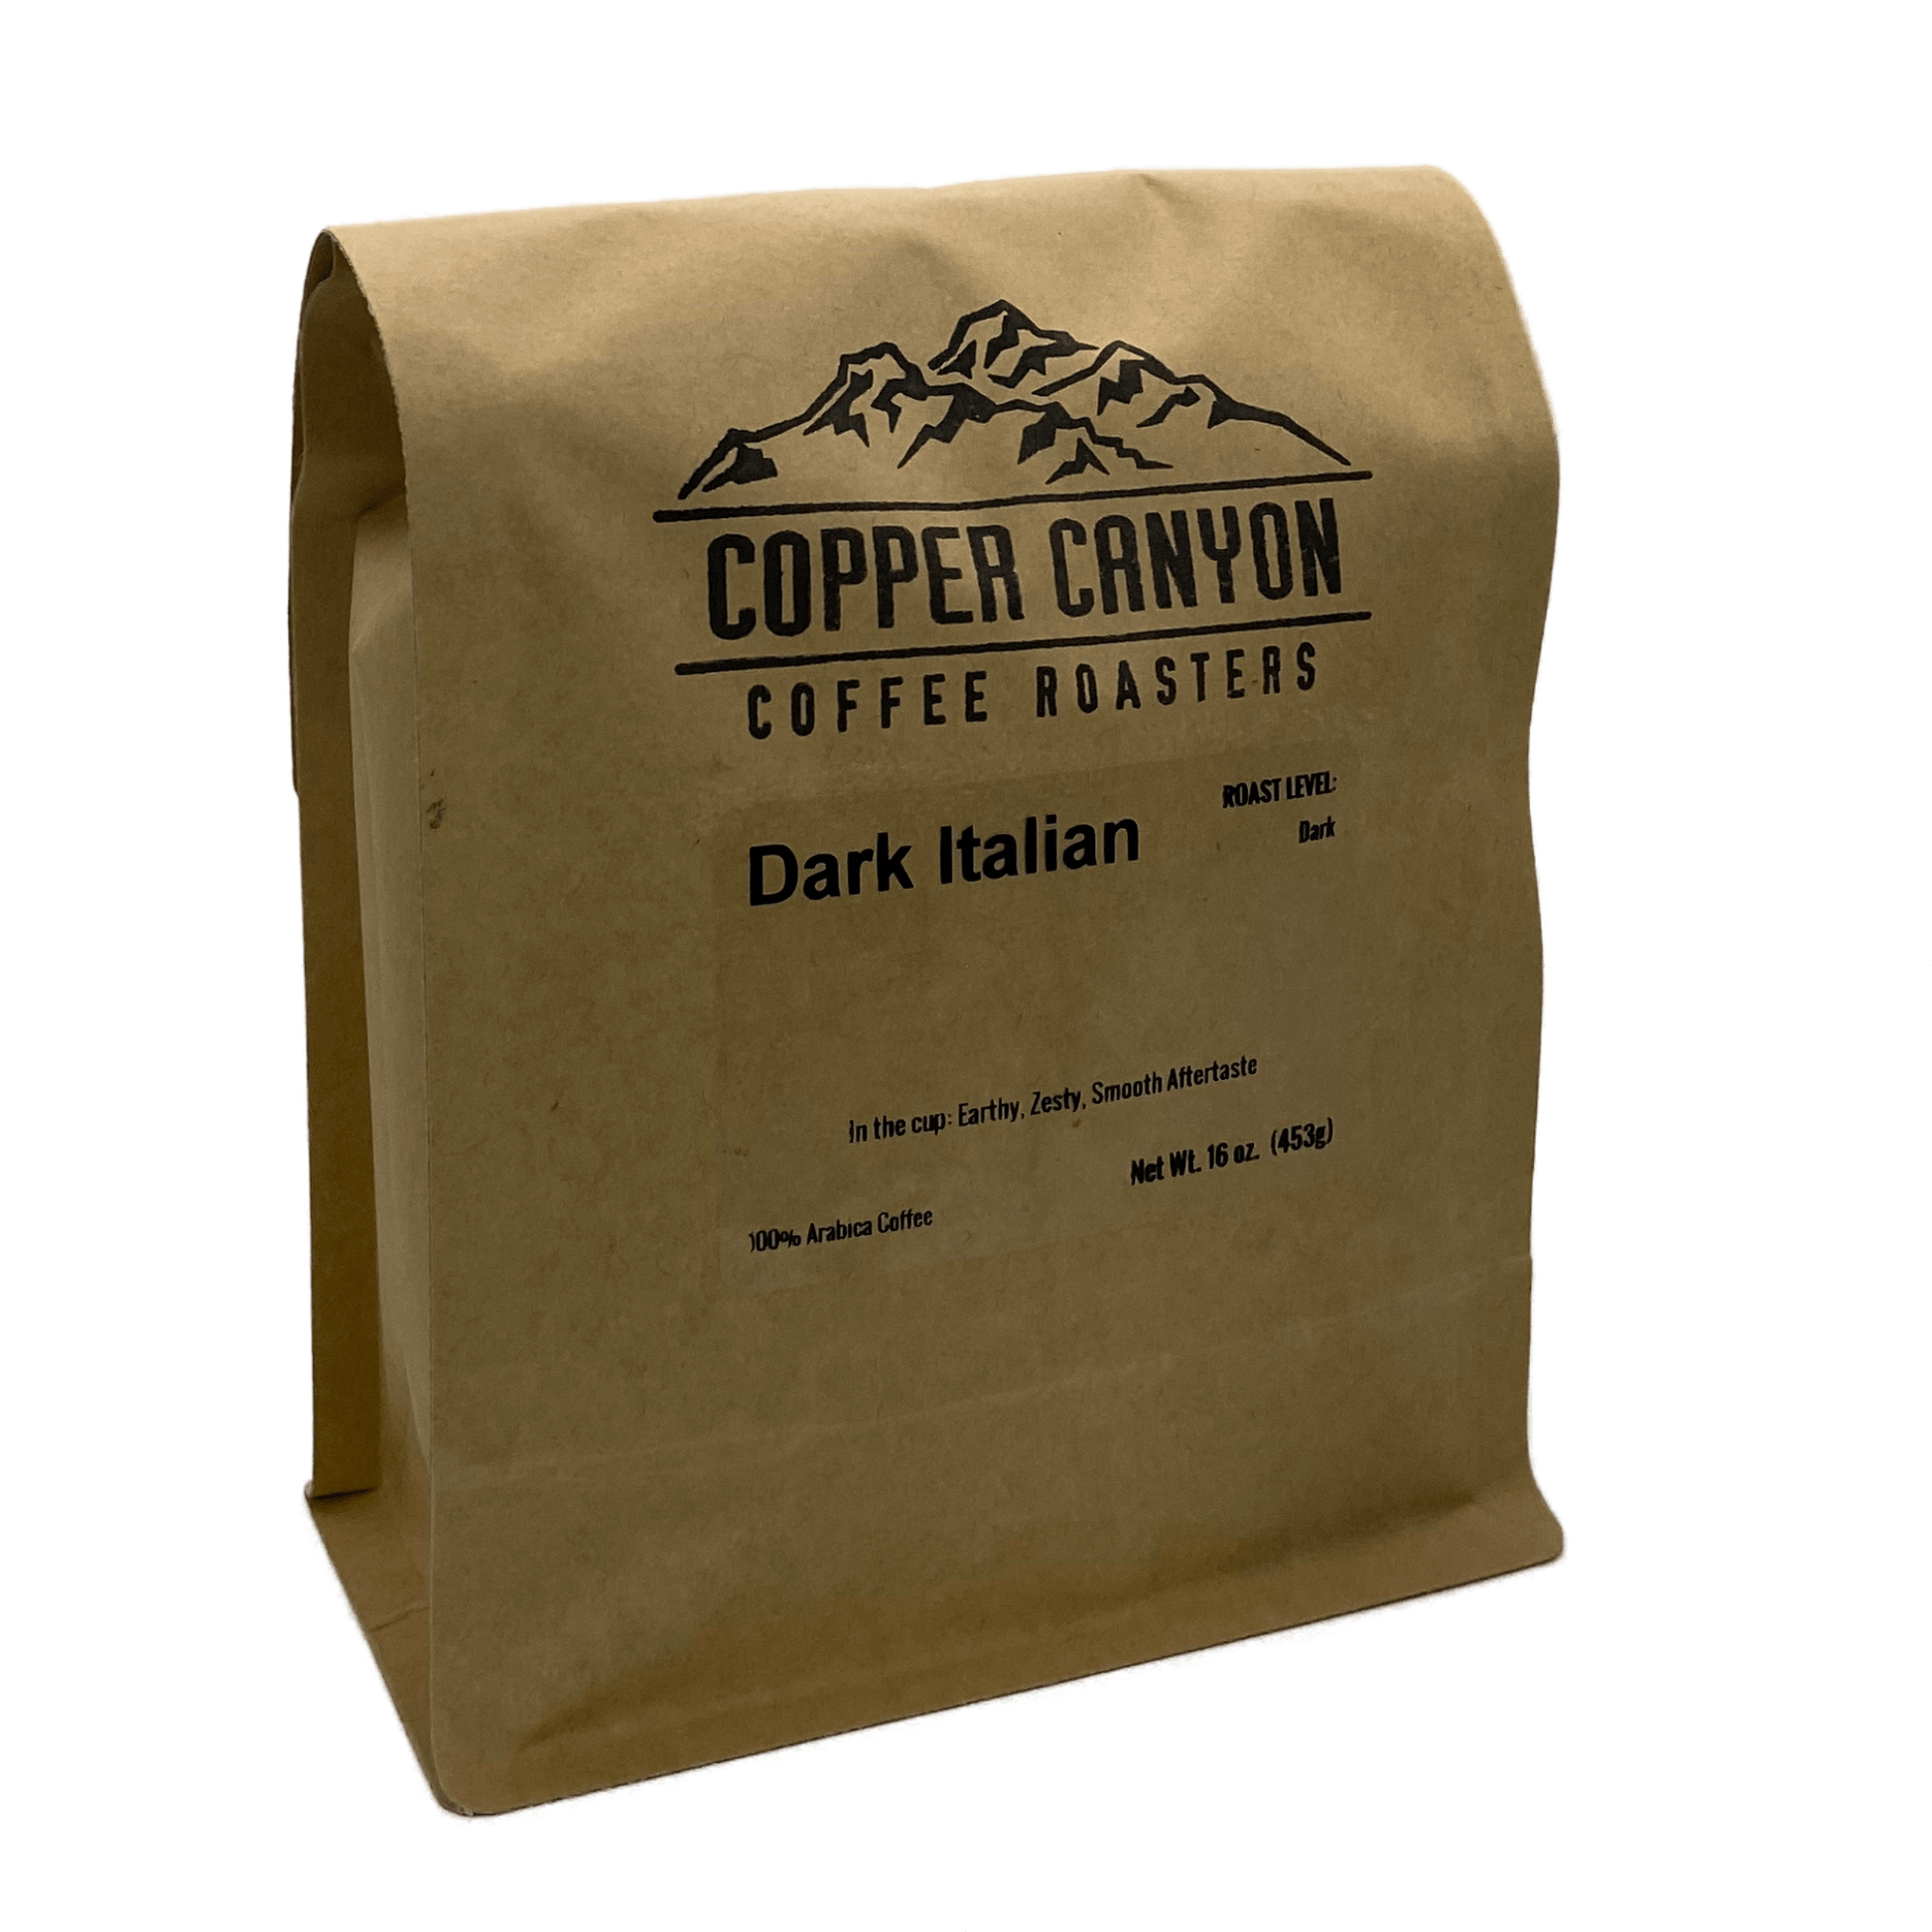 16 oz bag of Dark Italian, single origin, dark roast coffee